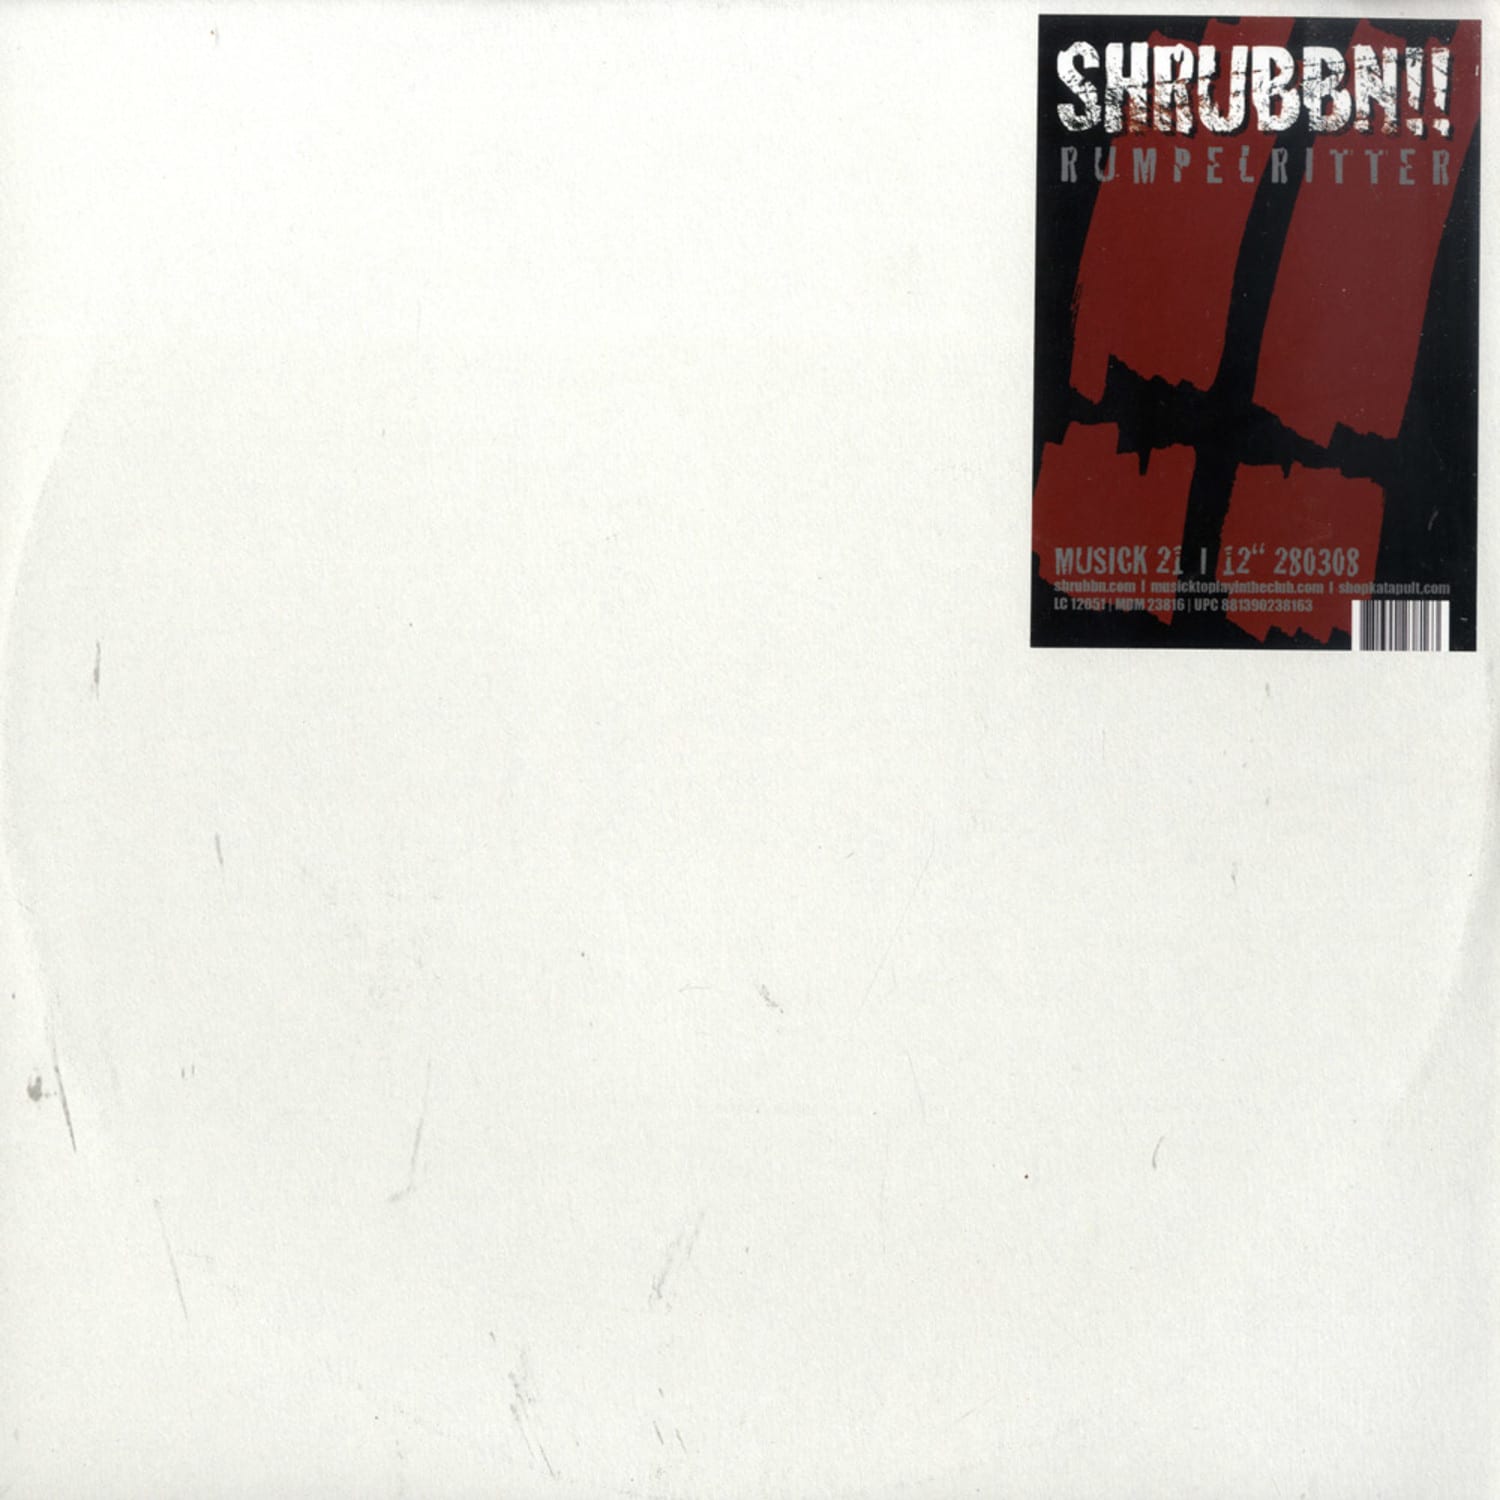 Shrubbn - RUMPELRITTER